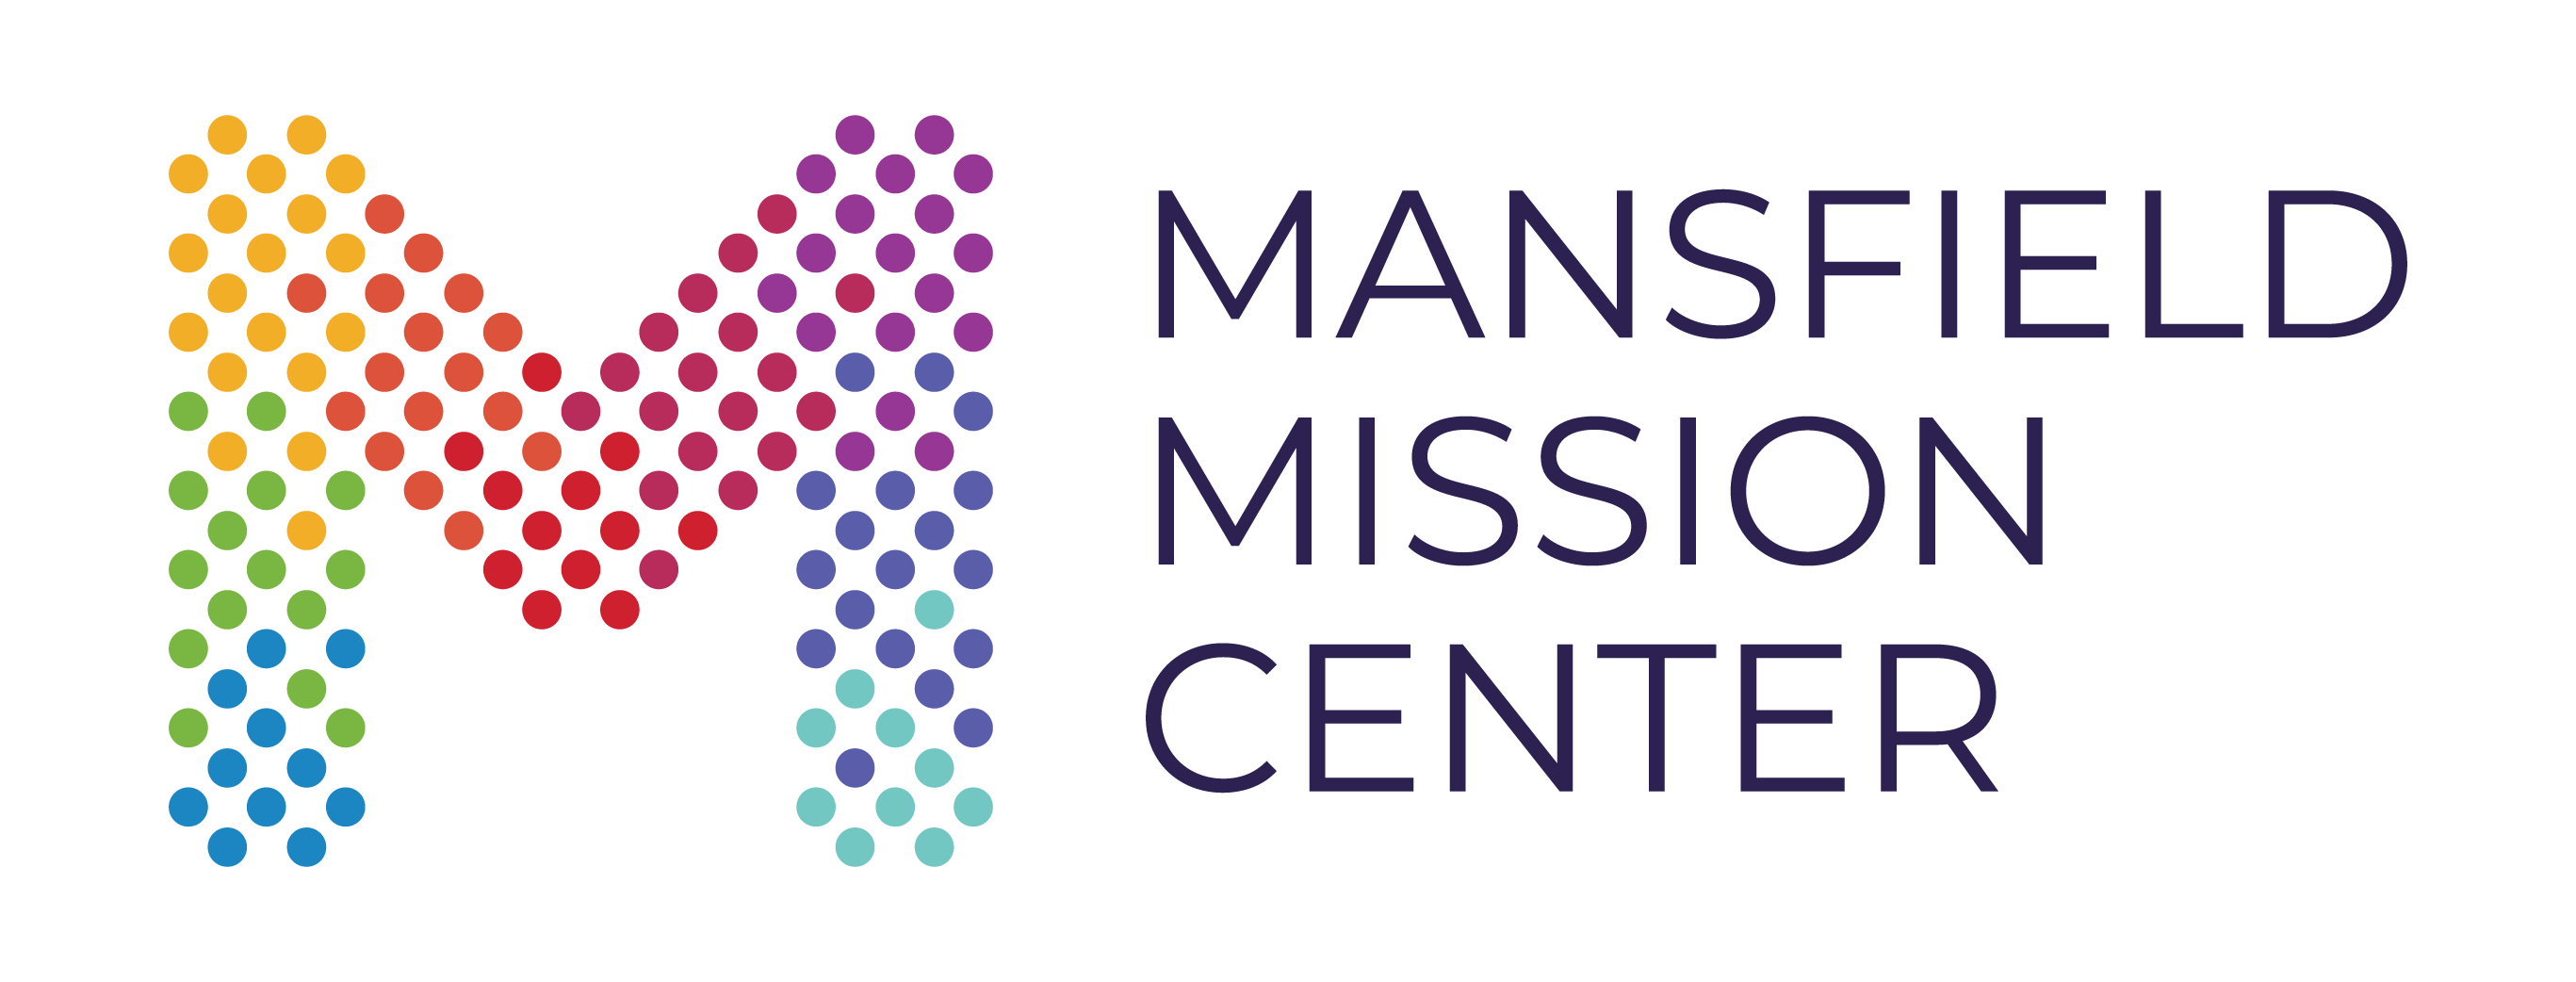 Mansfield Mission Center